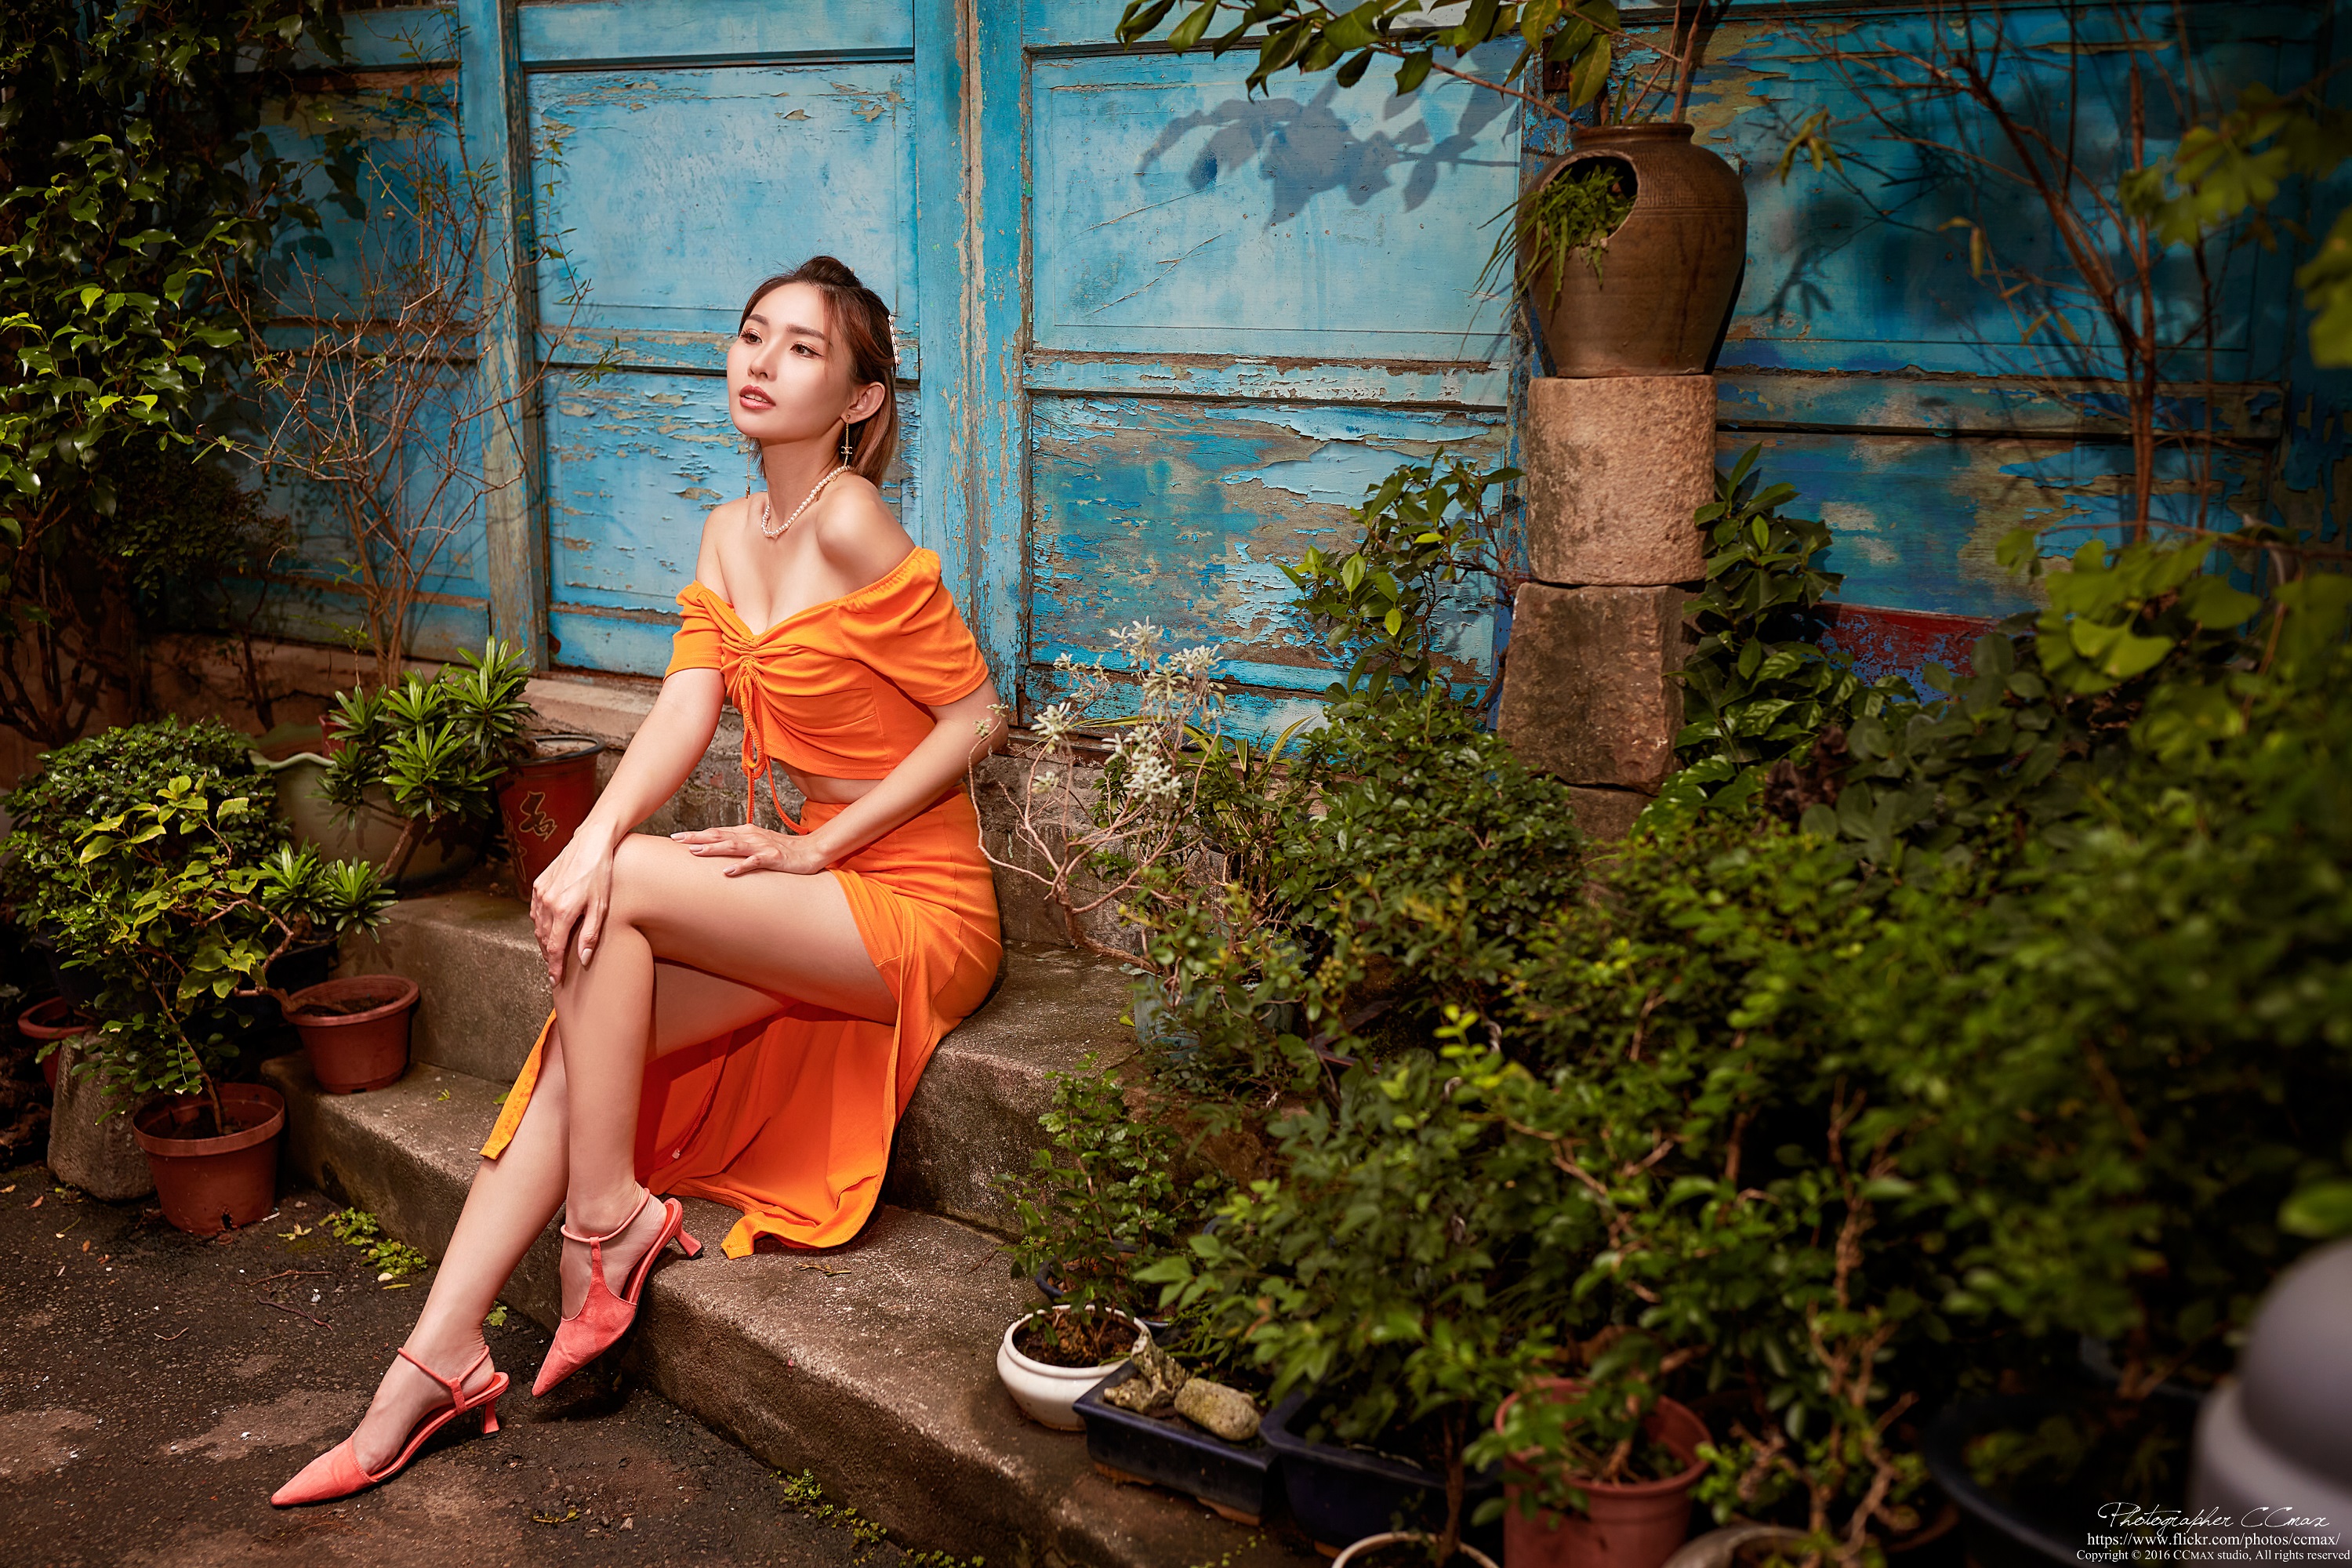 Max Chang Women Asian Brunette Orange Clothing Plants Bare Shoulders Legs Garden Pearl Necklace 3000x2000